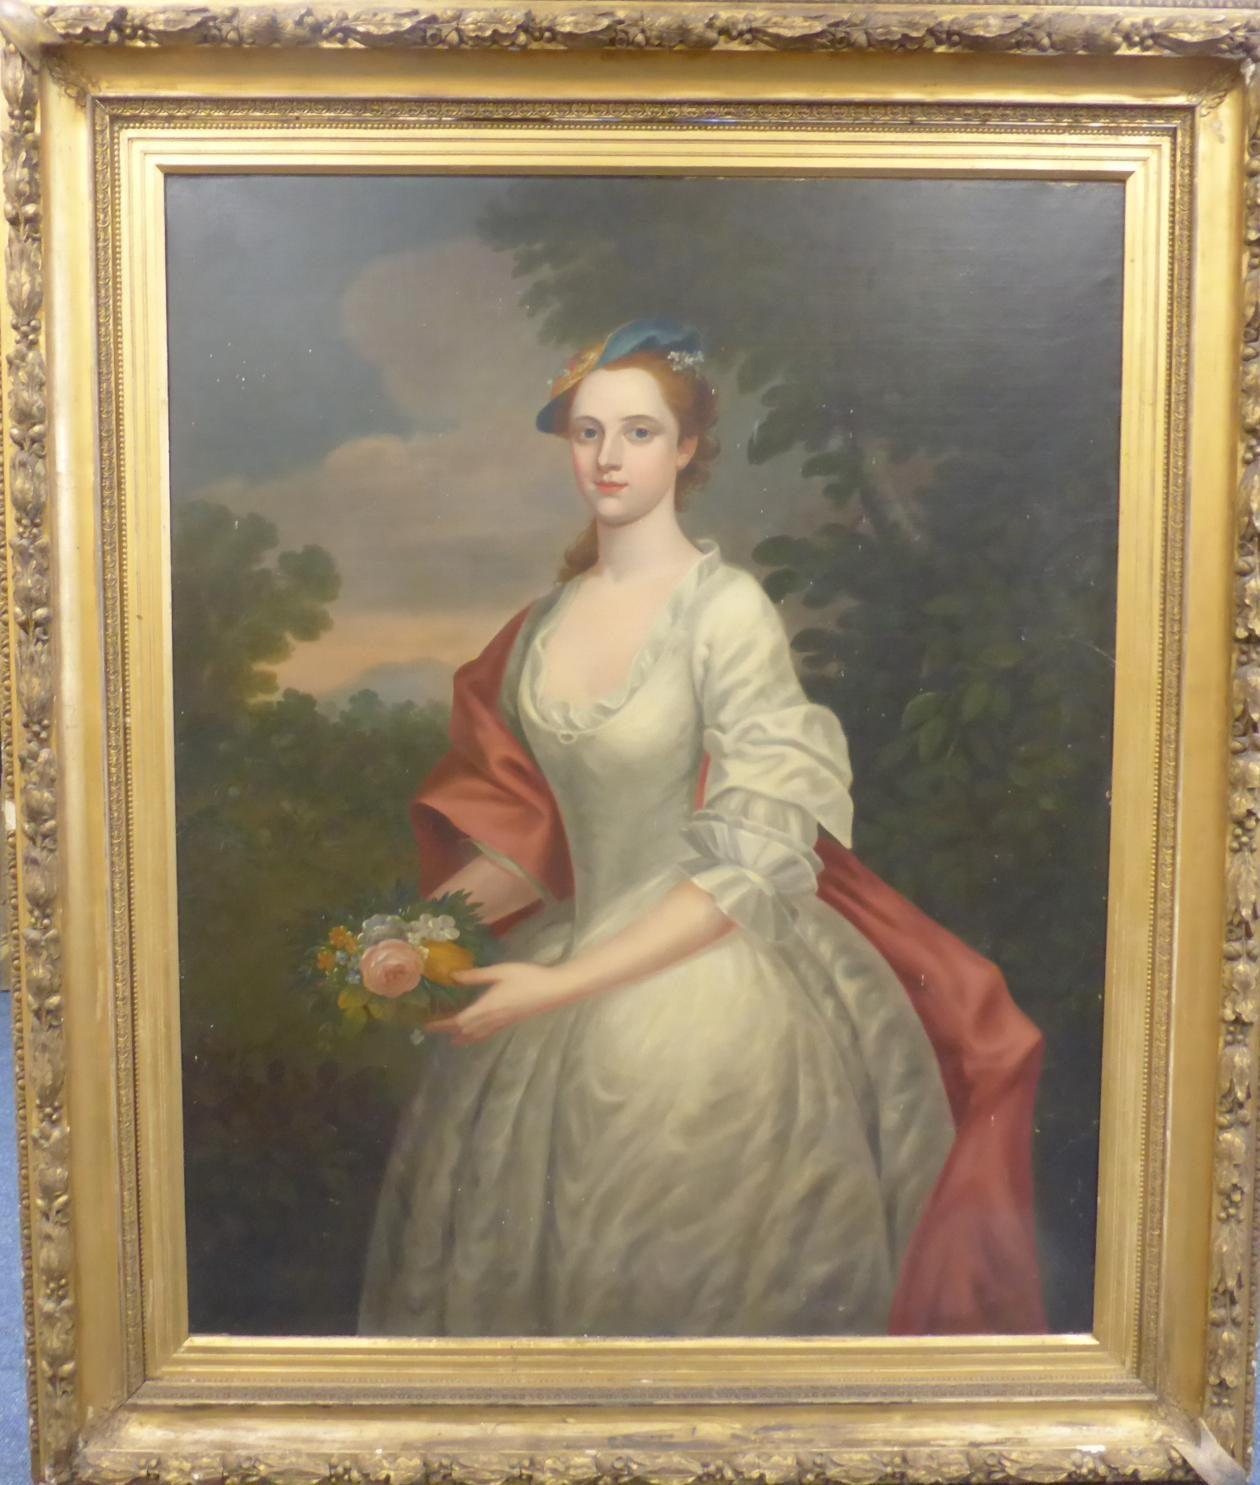 sir godfrey kneller (manner of) Portrait Painting - 19th century antique portrait lady in landscape Godfrey Kneller (manner of)